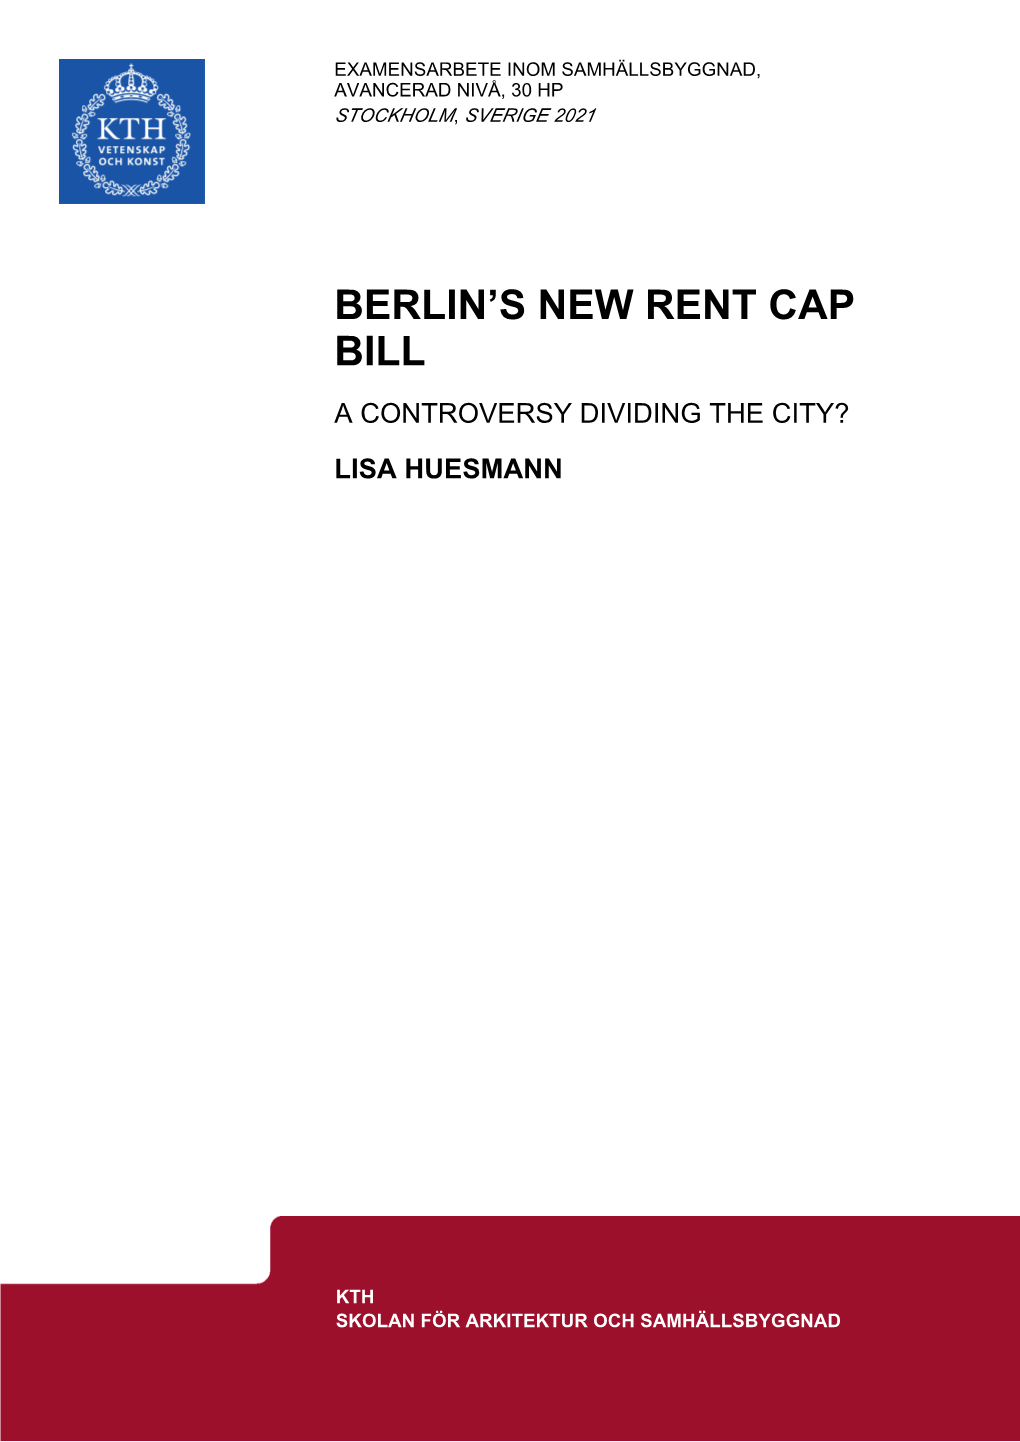 Berlin's New Rent Cap Bill